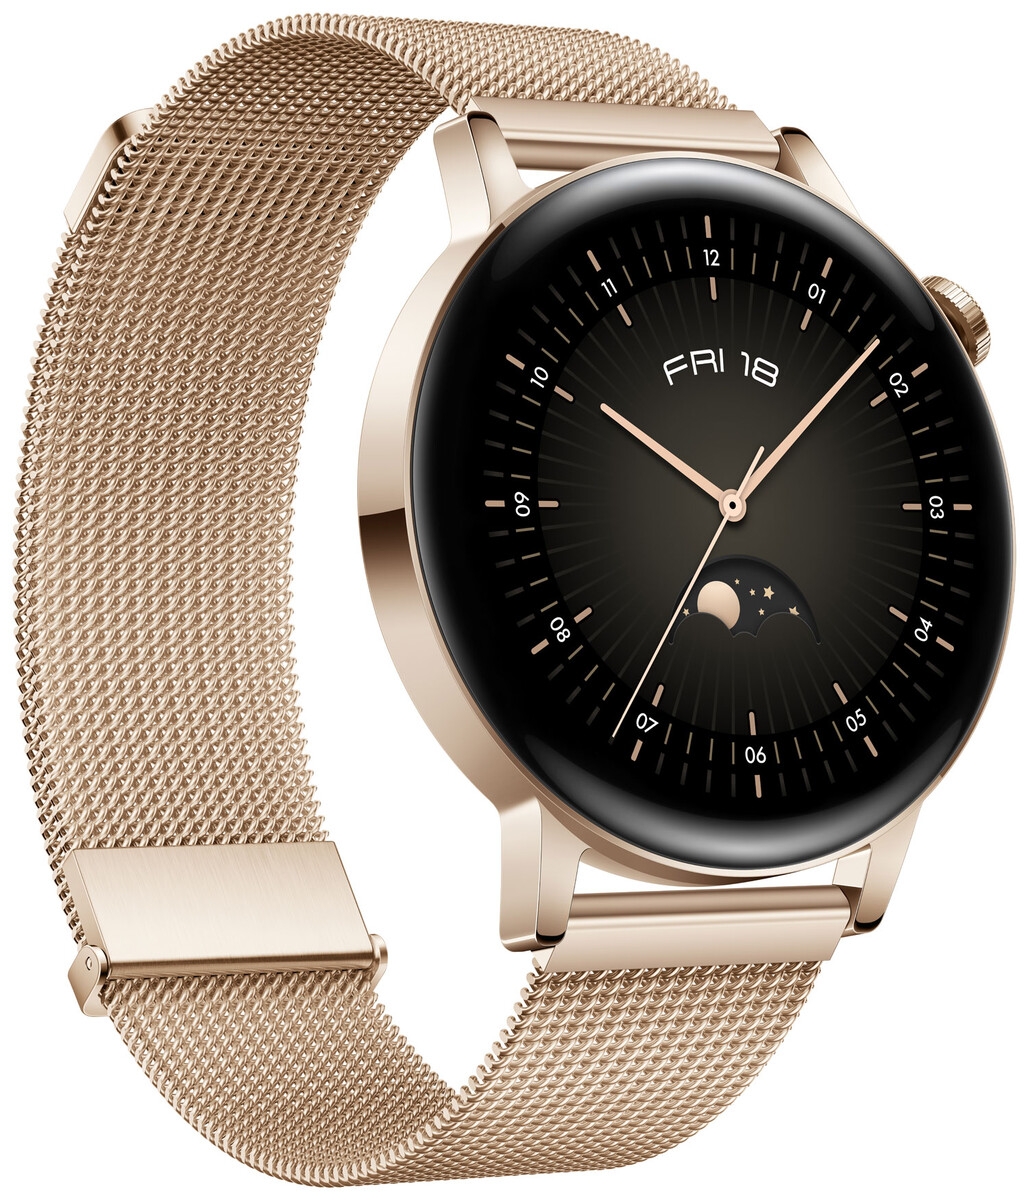 Huawei Watch GT 3 arrives in six styles from £209.99 